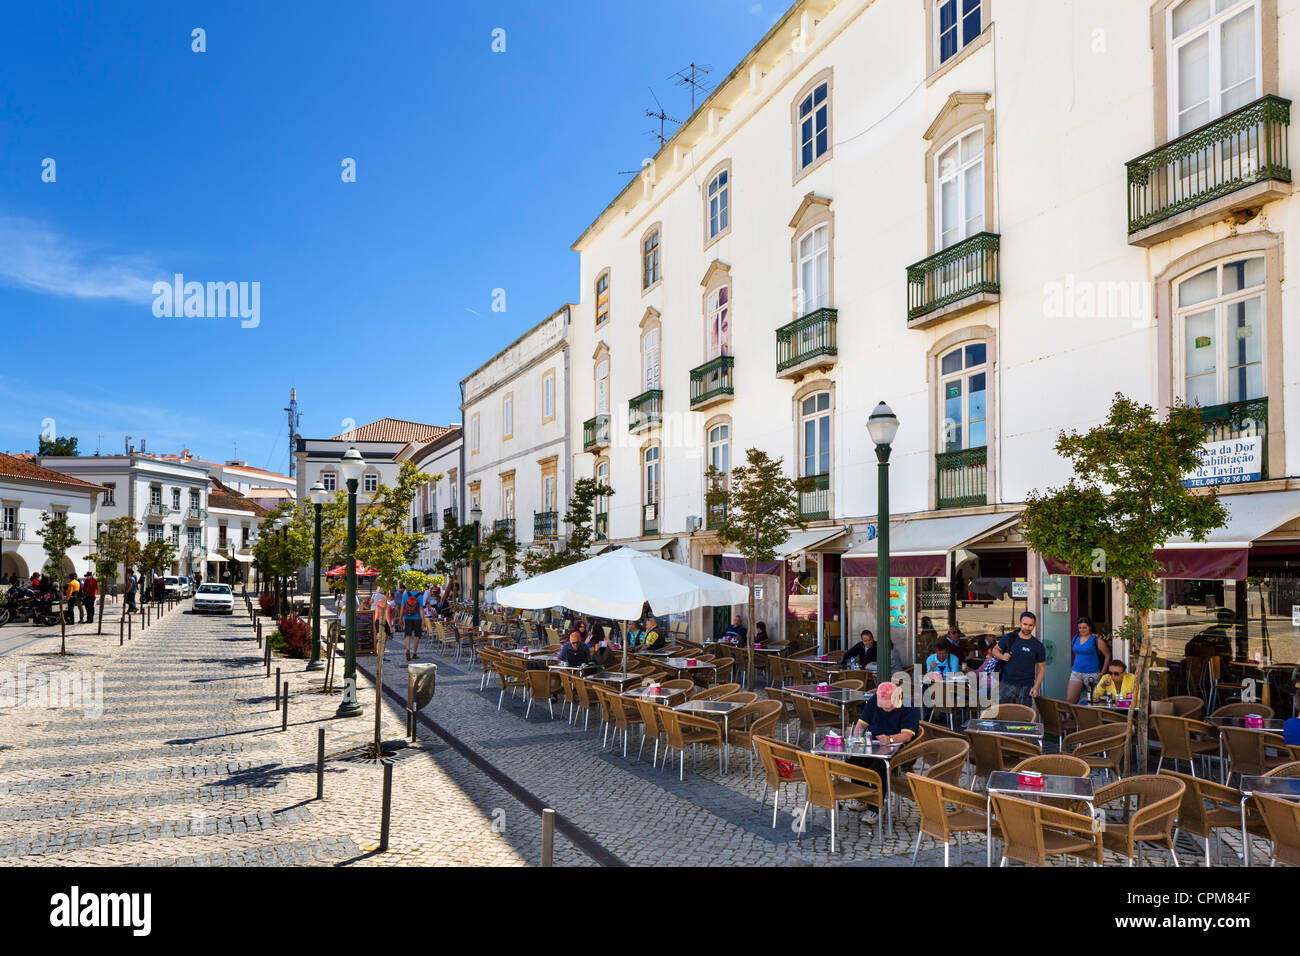 Cafes and shops on Praca da Republica in the Old Town, Tavira, Algarve, Portugal Stock Photo